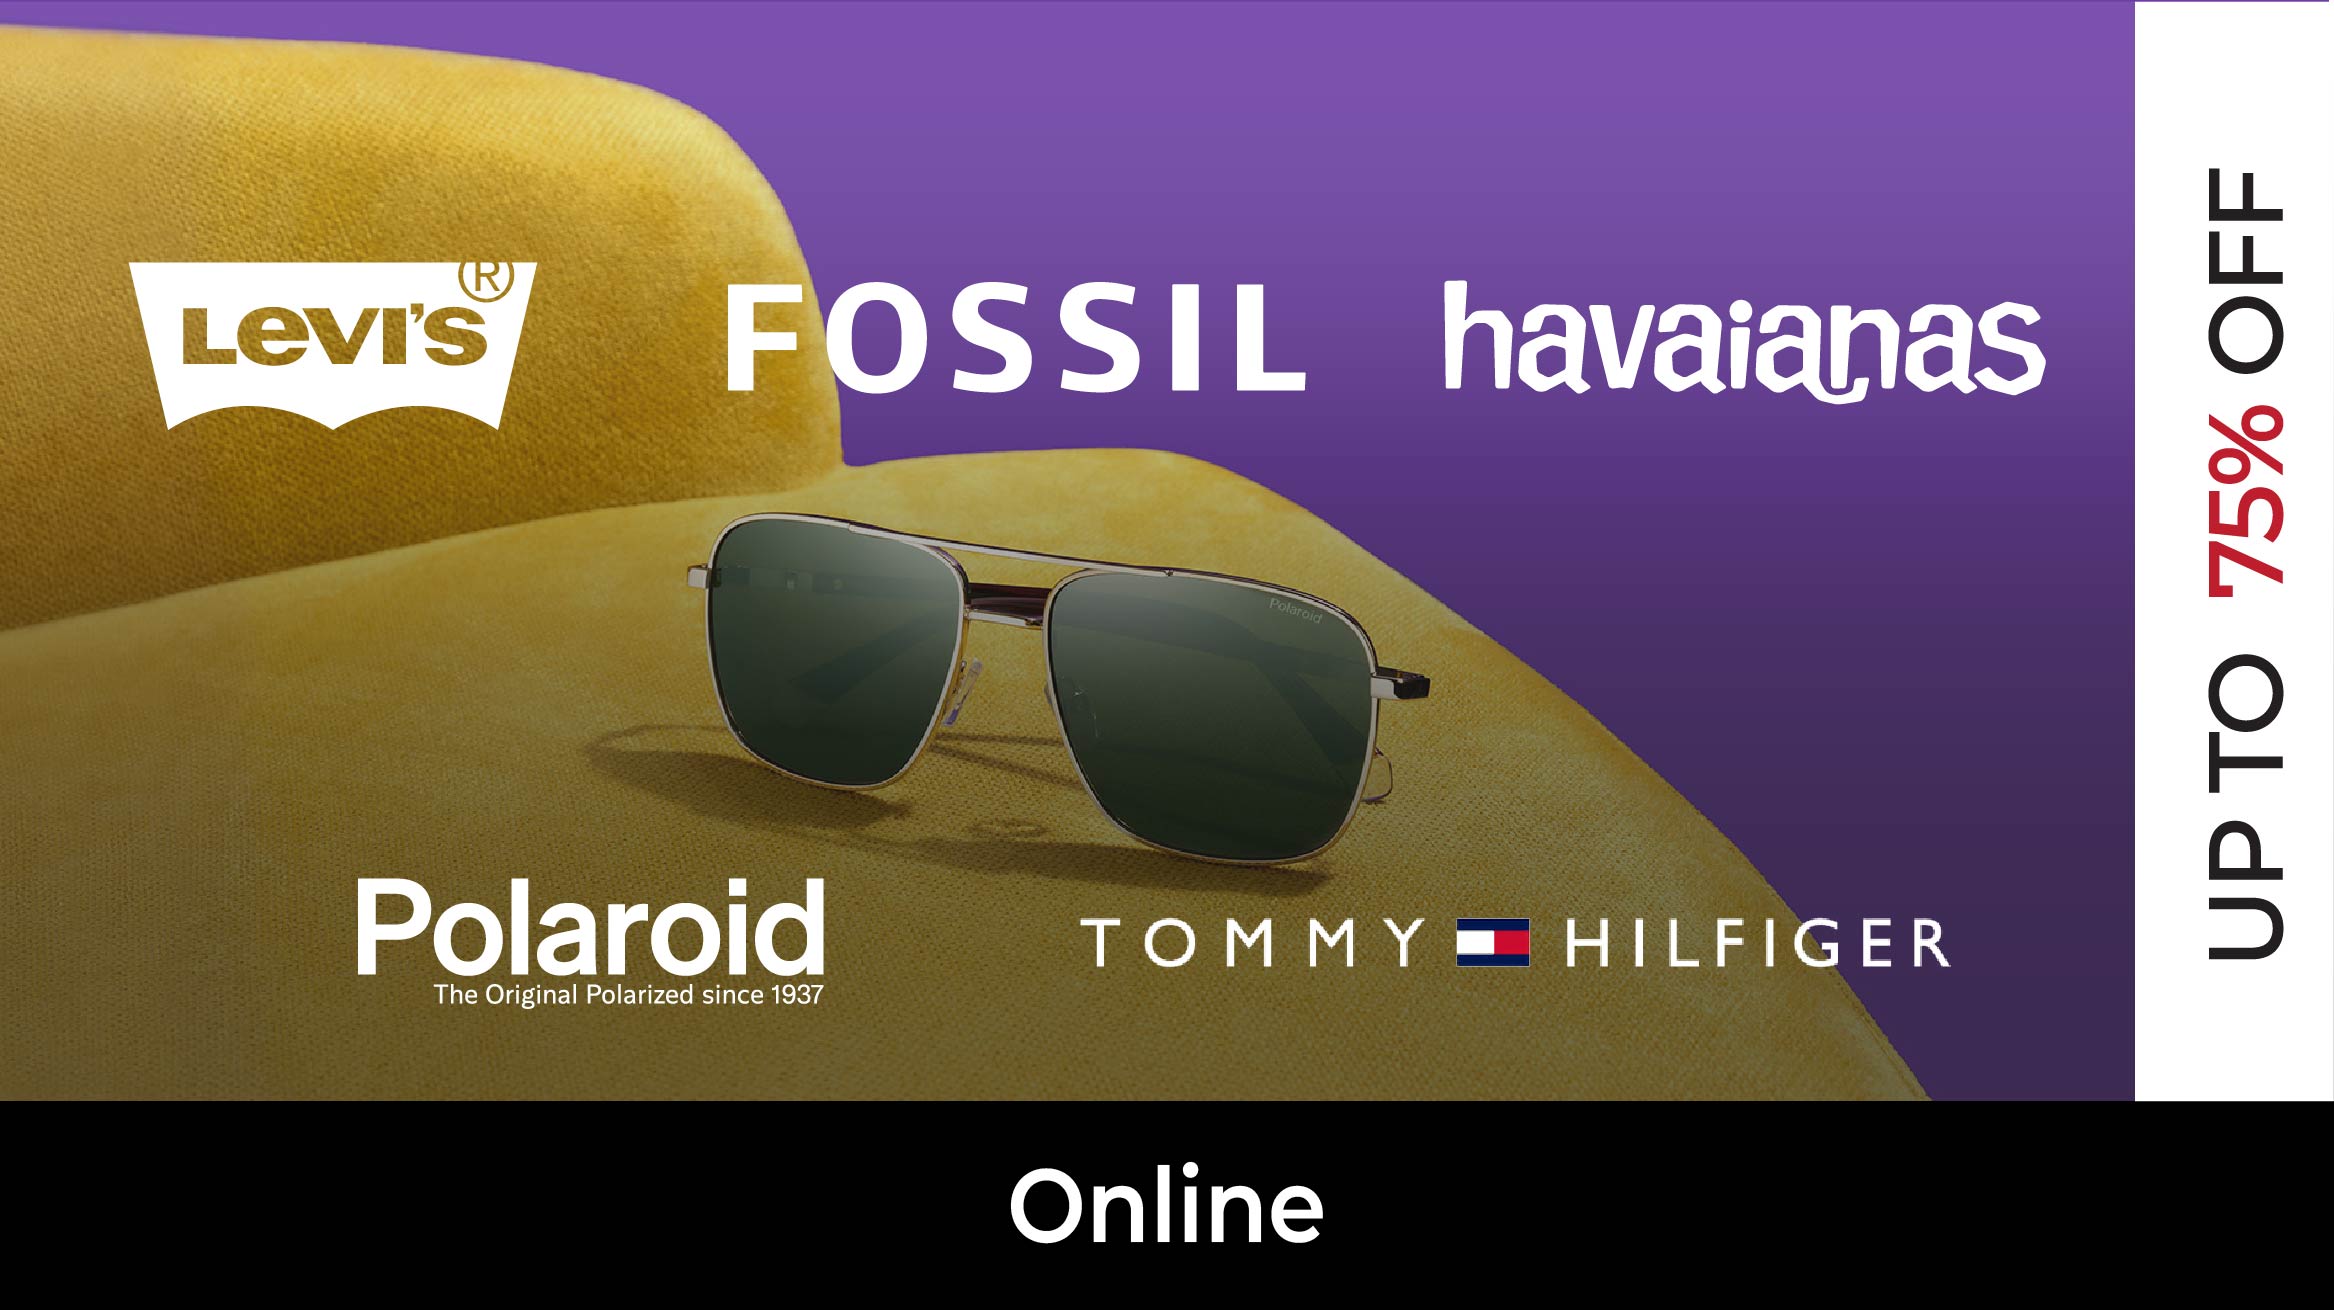 Fossil, Havaianas, Tommy Hilfiger, Polaroid, Levi's Flash Sale (Online)